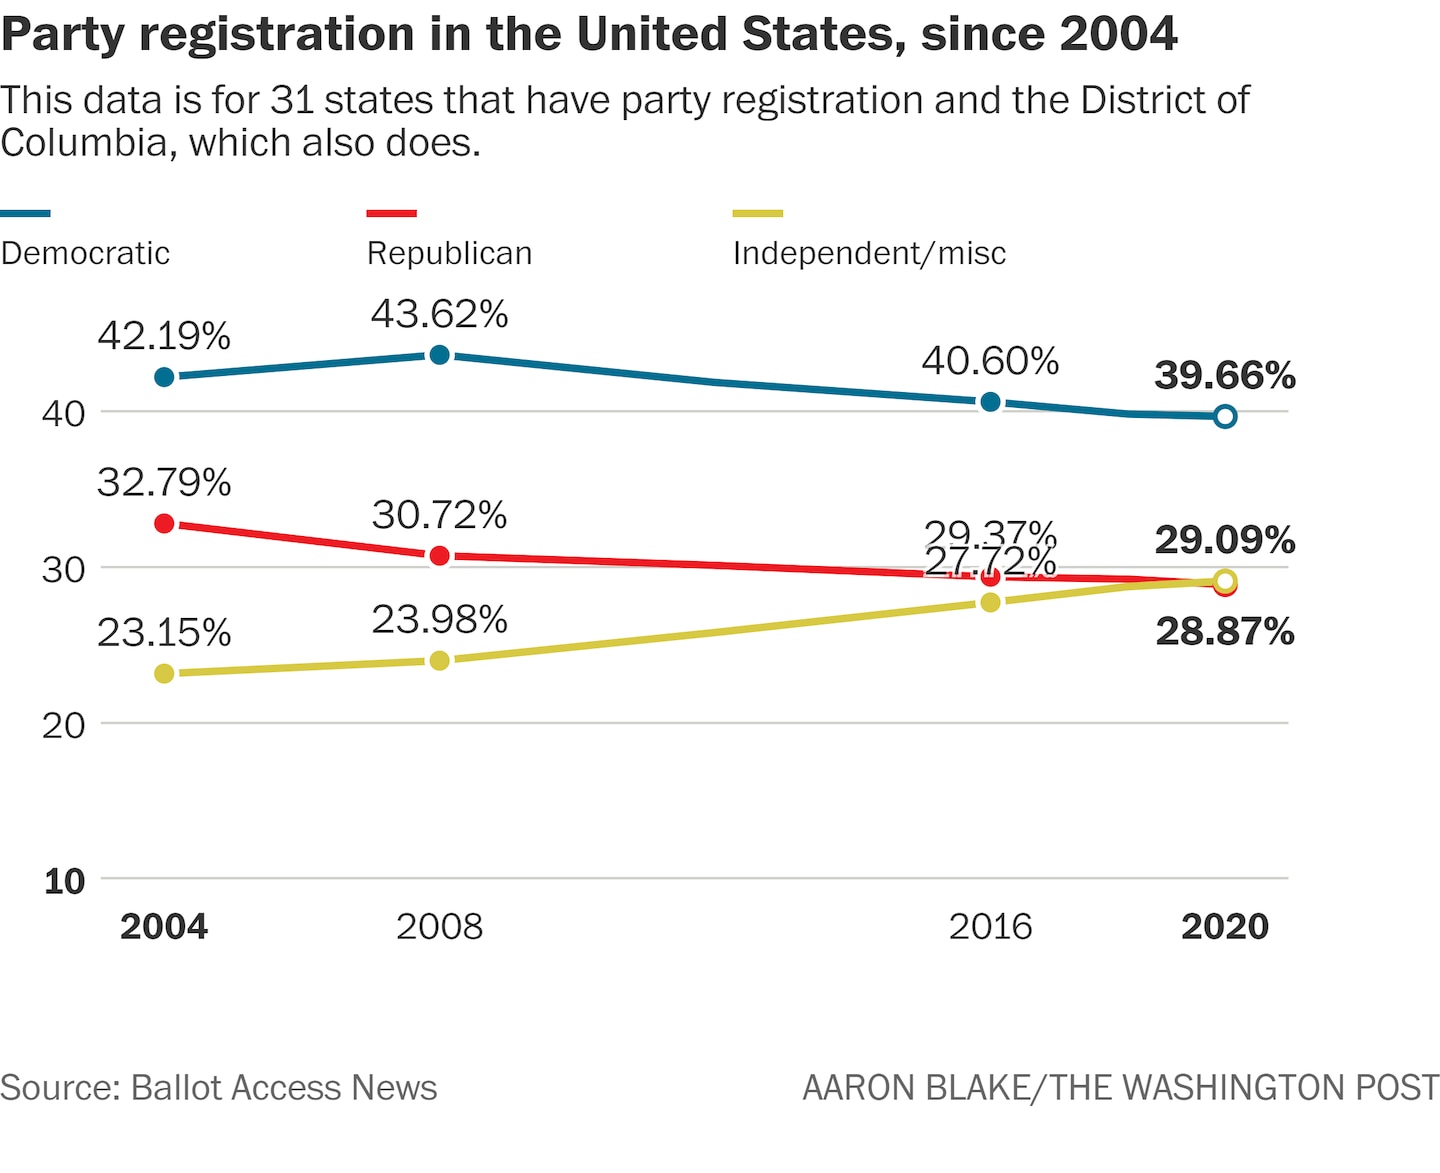 Most registrations